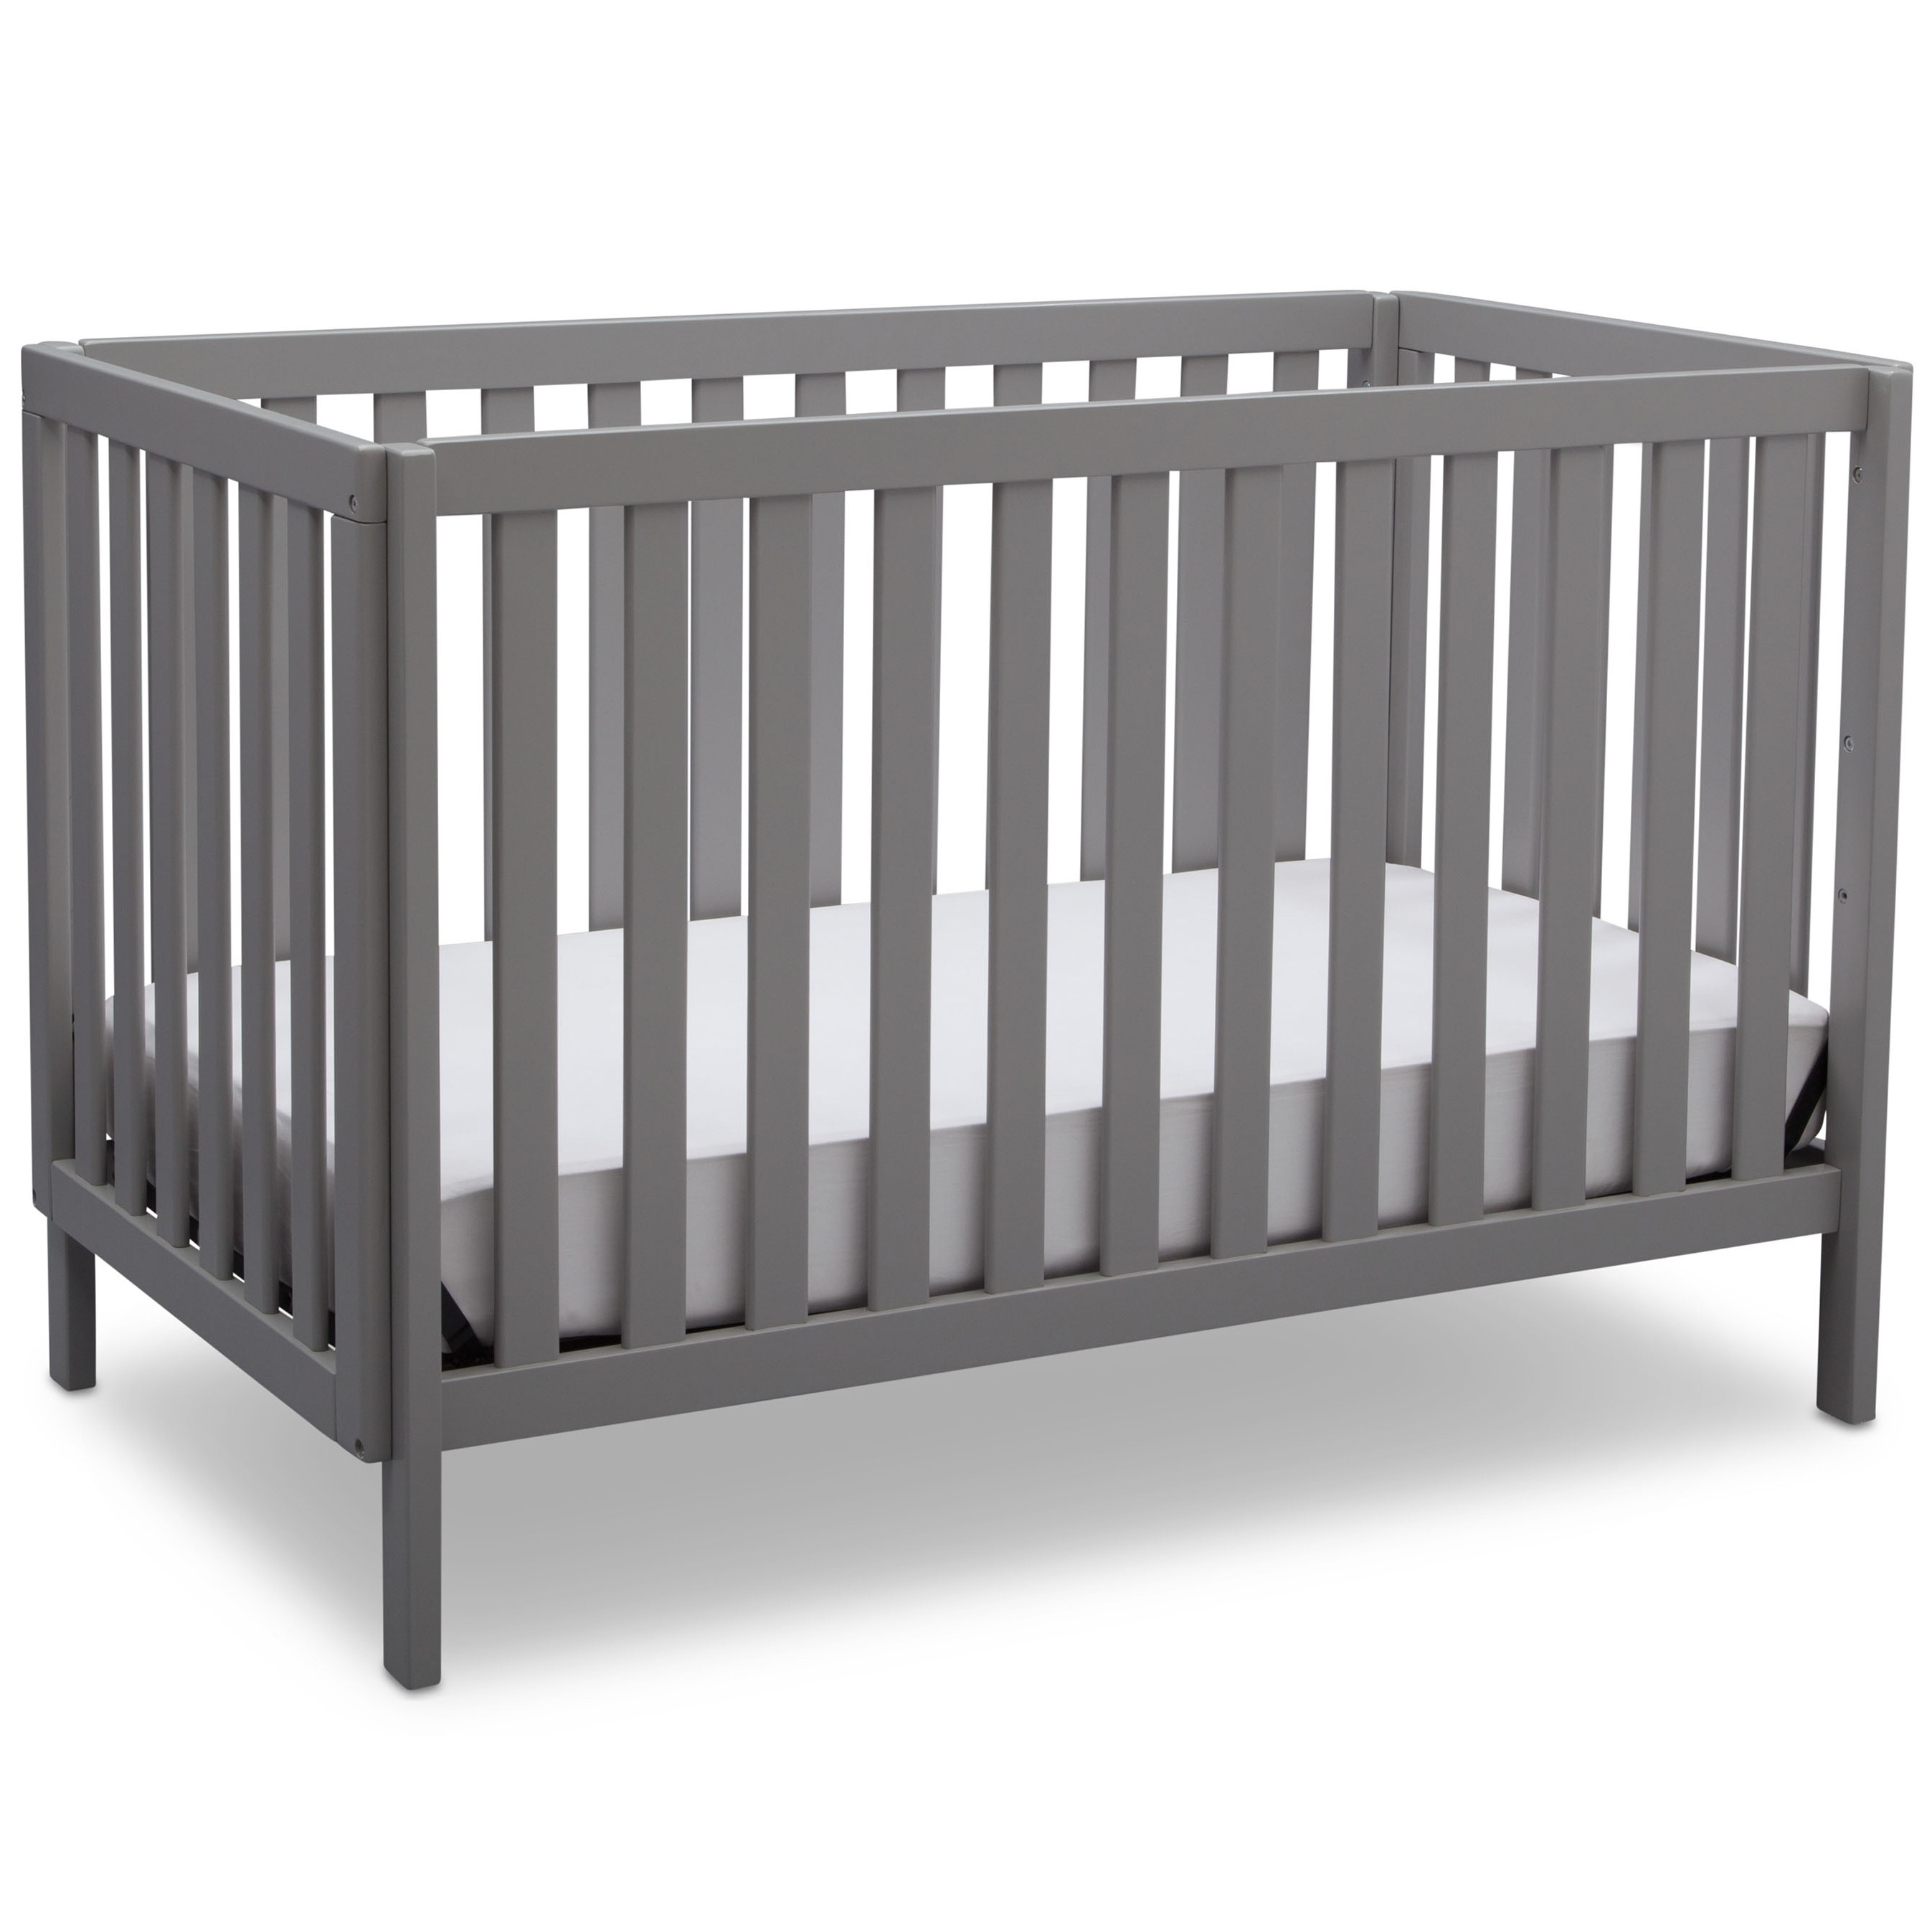 Delta Children Milo 3-in-1 Convertible Crib, Grey - Walmart.com $109.99